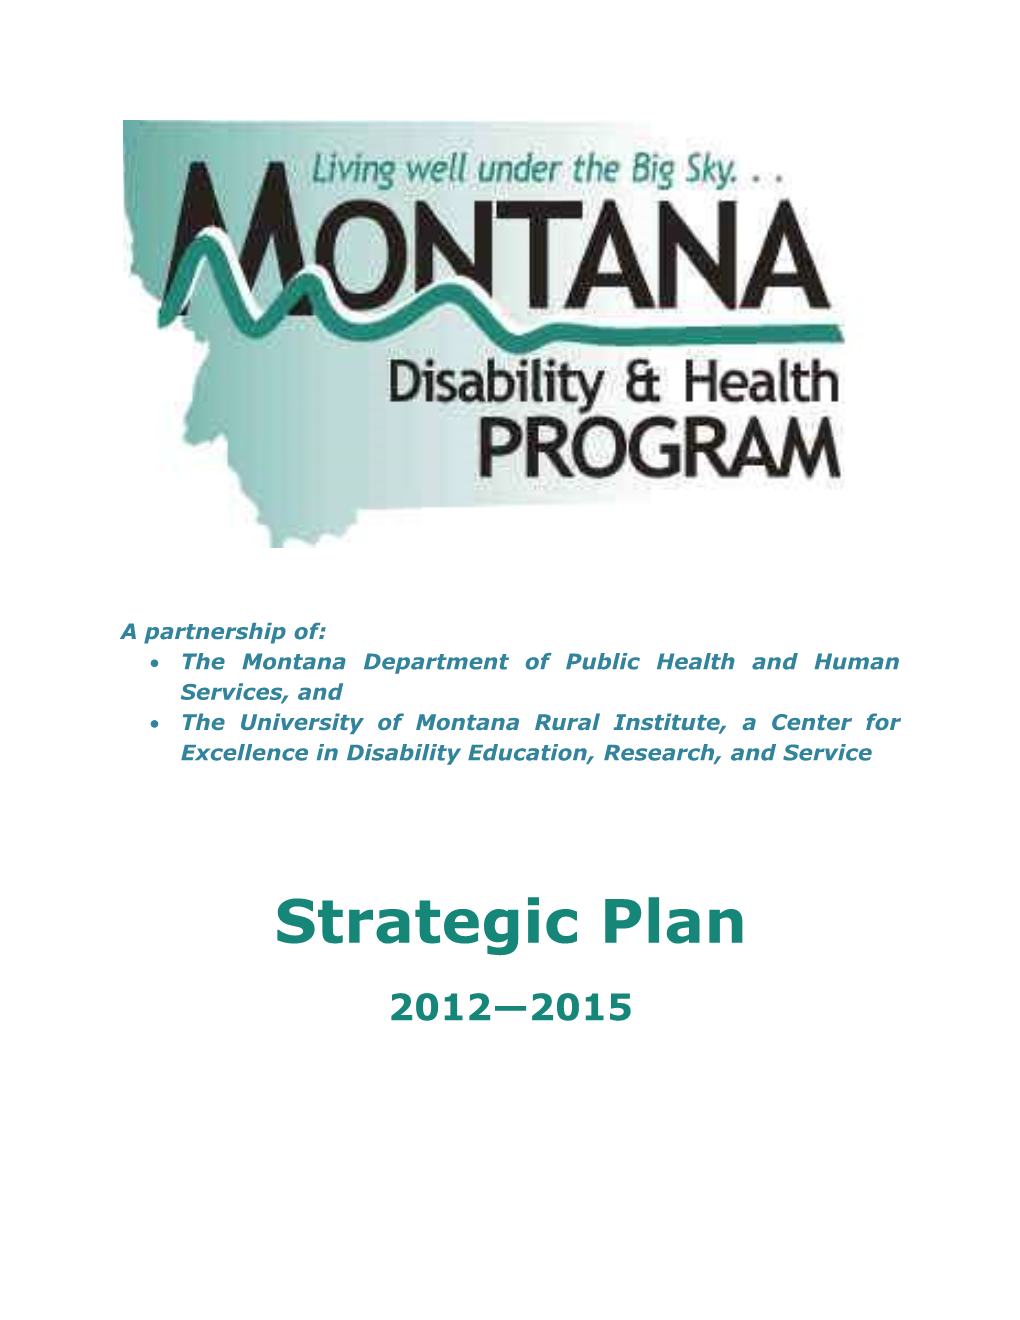 Strategic Plan, Montana Disability and Health Program